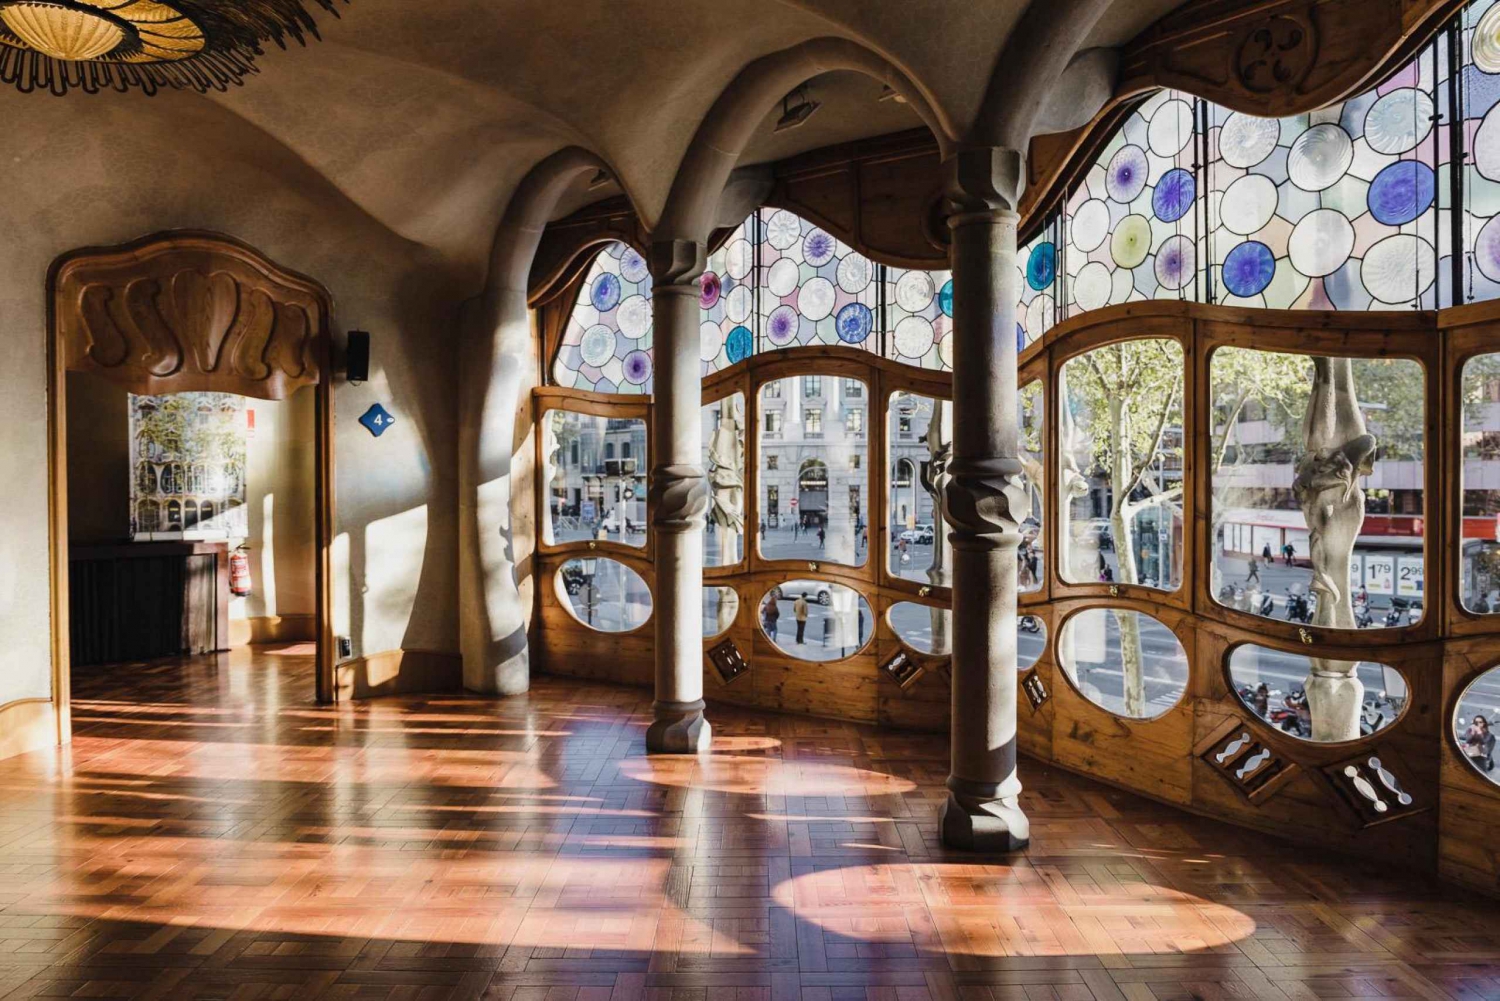 Barcelona: Gaudi rondleiding naar Sagrada, Huizen & Park Guell